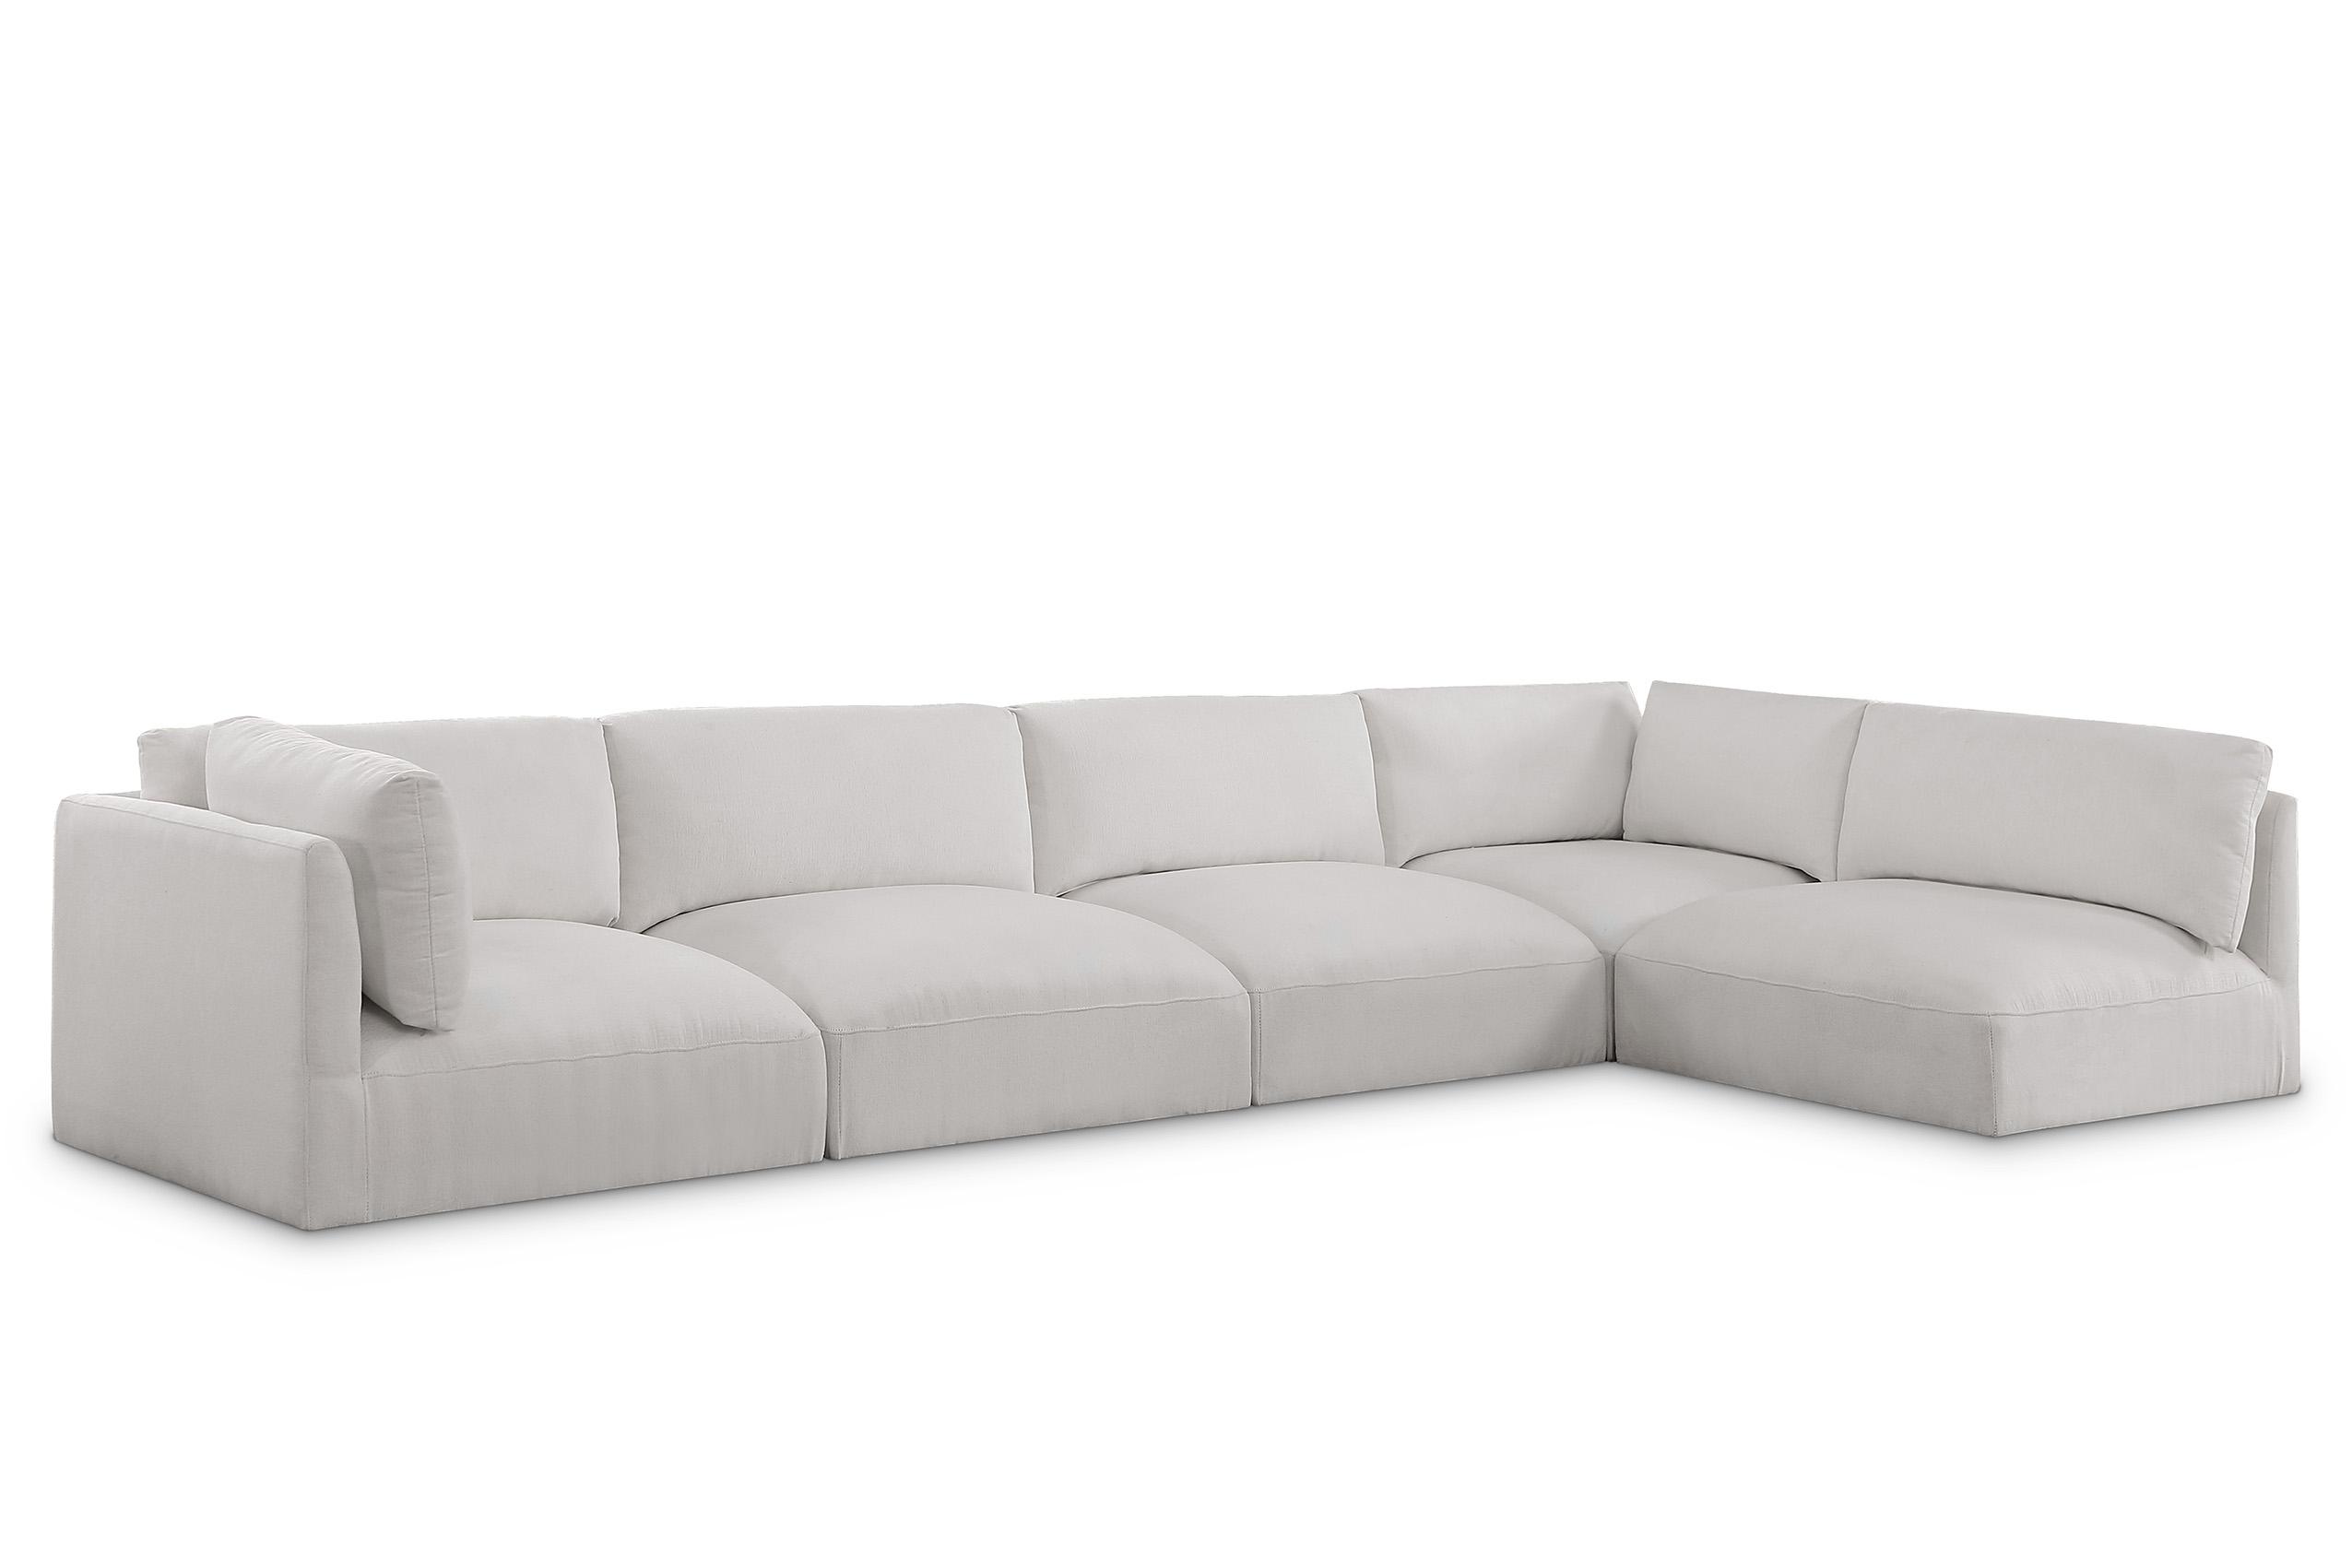 Contemporary, Modern Modular Sectional Sofa EASE 696Cream-Sec5B 696Cream-Sec5B in Cream Fabric